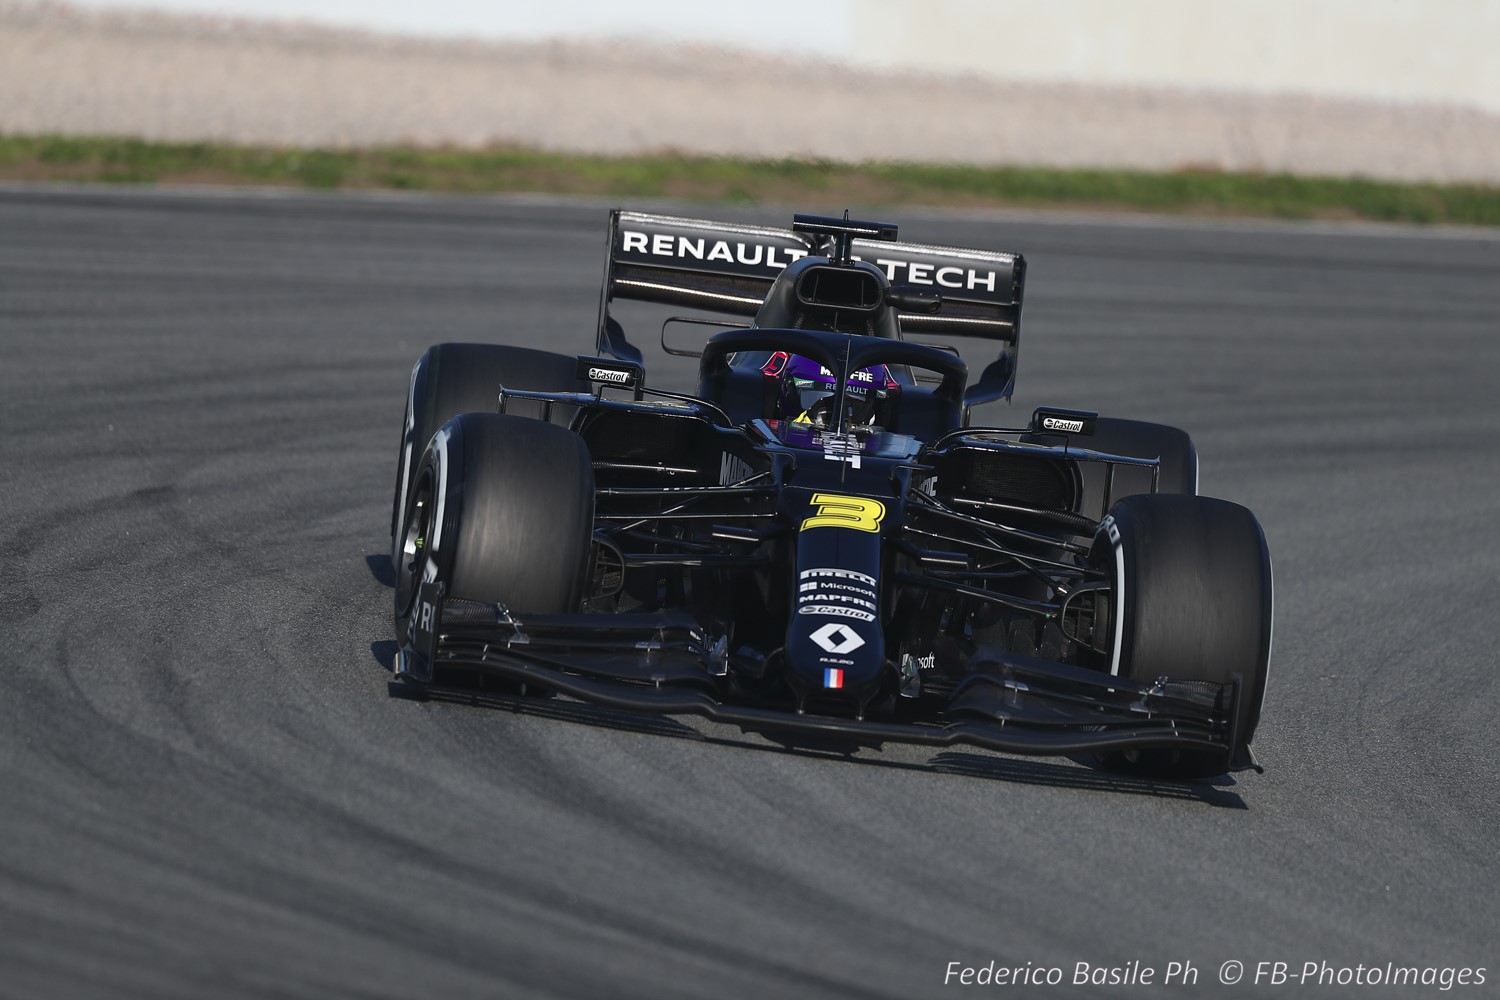 Ricciardo in the new Renault